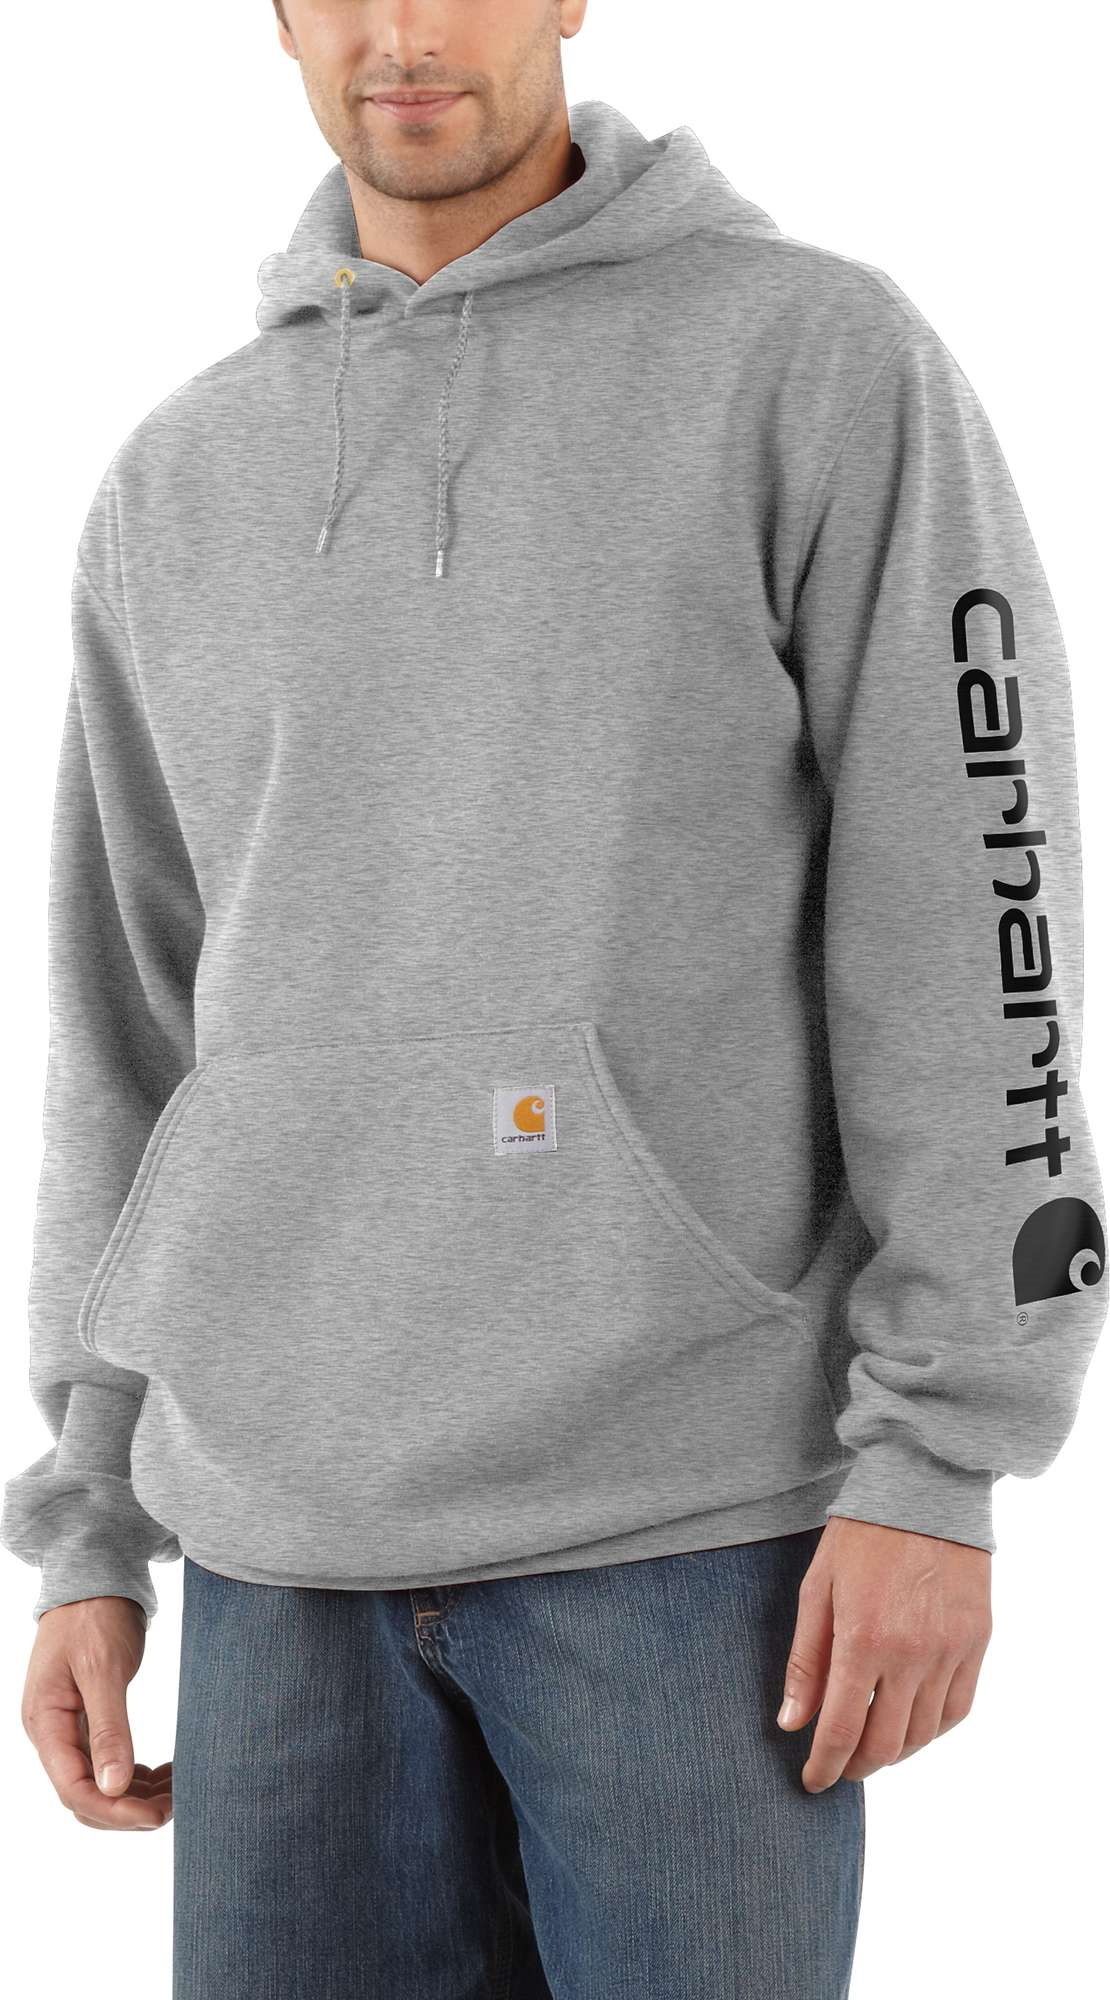 Carhartt Men's Sleeve Logo Hooded Sweatshirt Heather Grey/Black